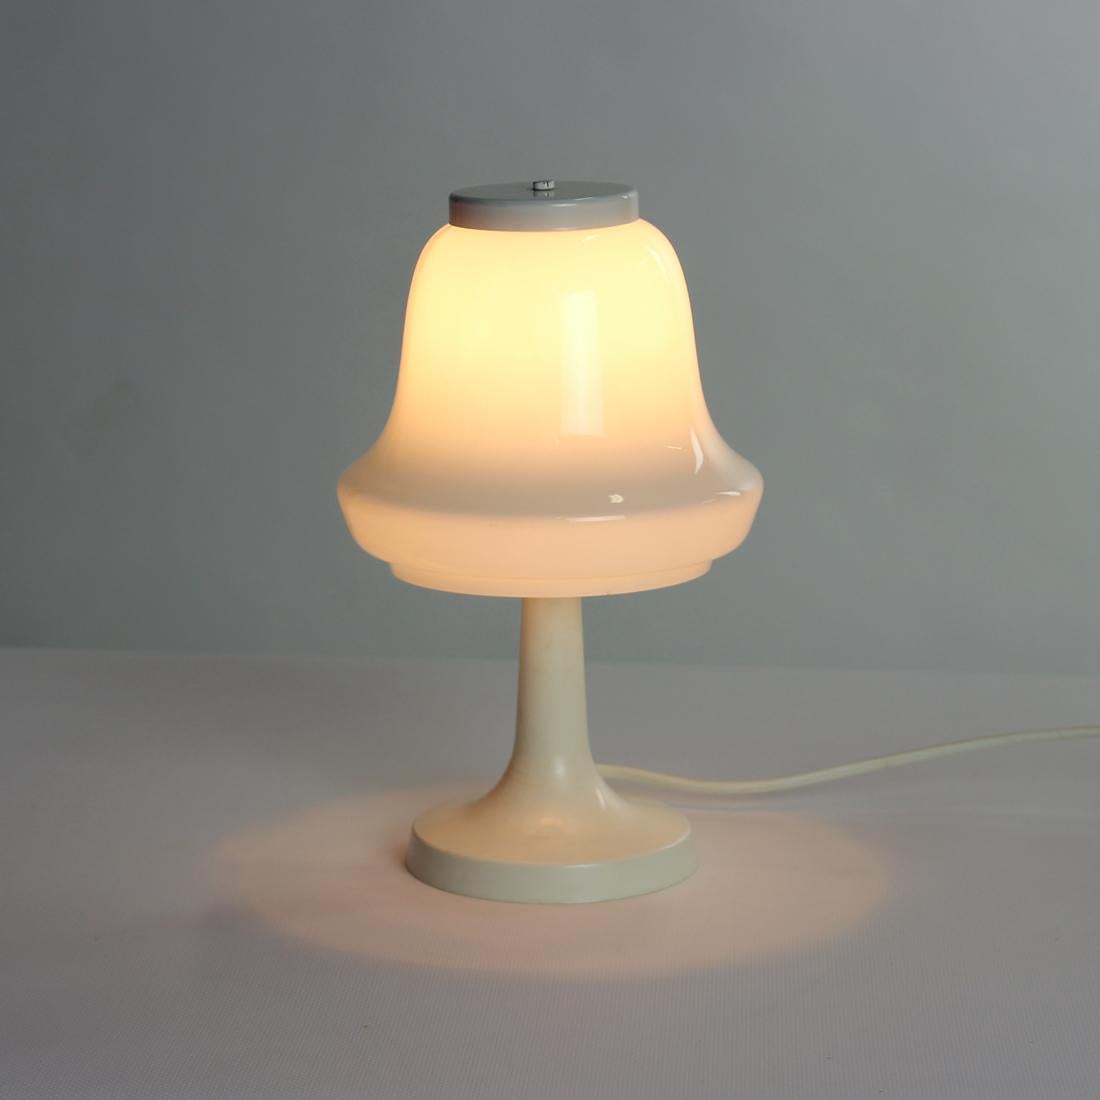 Set of 2 White Opaline Glass Table Lamps, Opp Jihlava, Czechoslovakia, 1960s For Sale 5